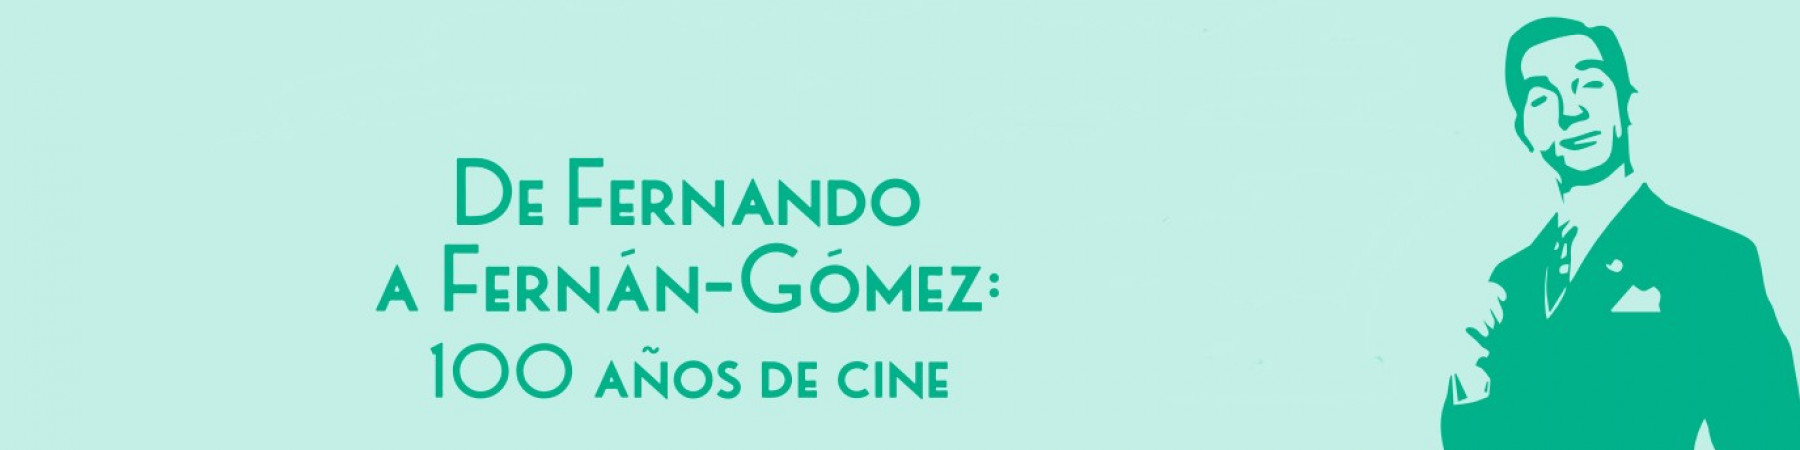 De Fernando a Fernán-Gómez:100 años de cine